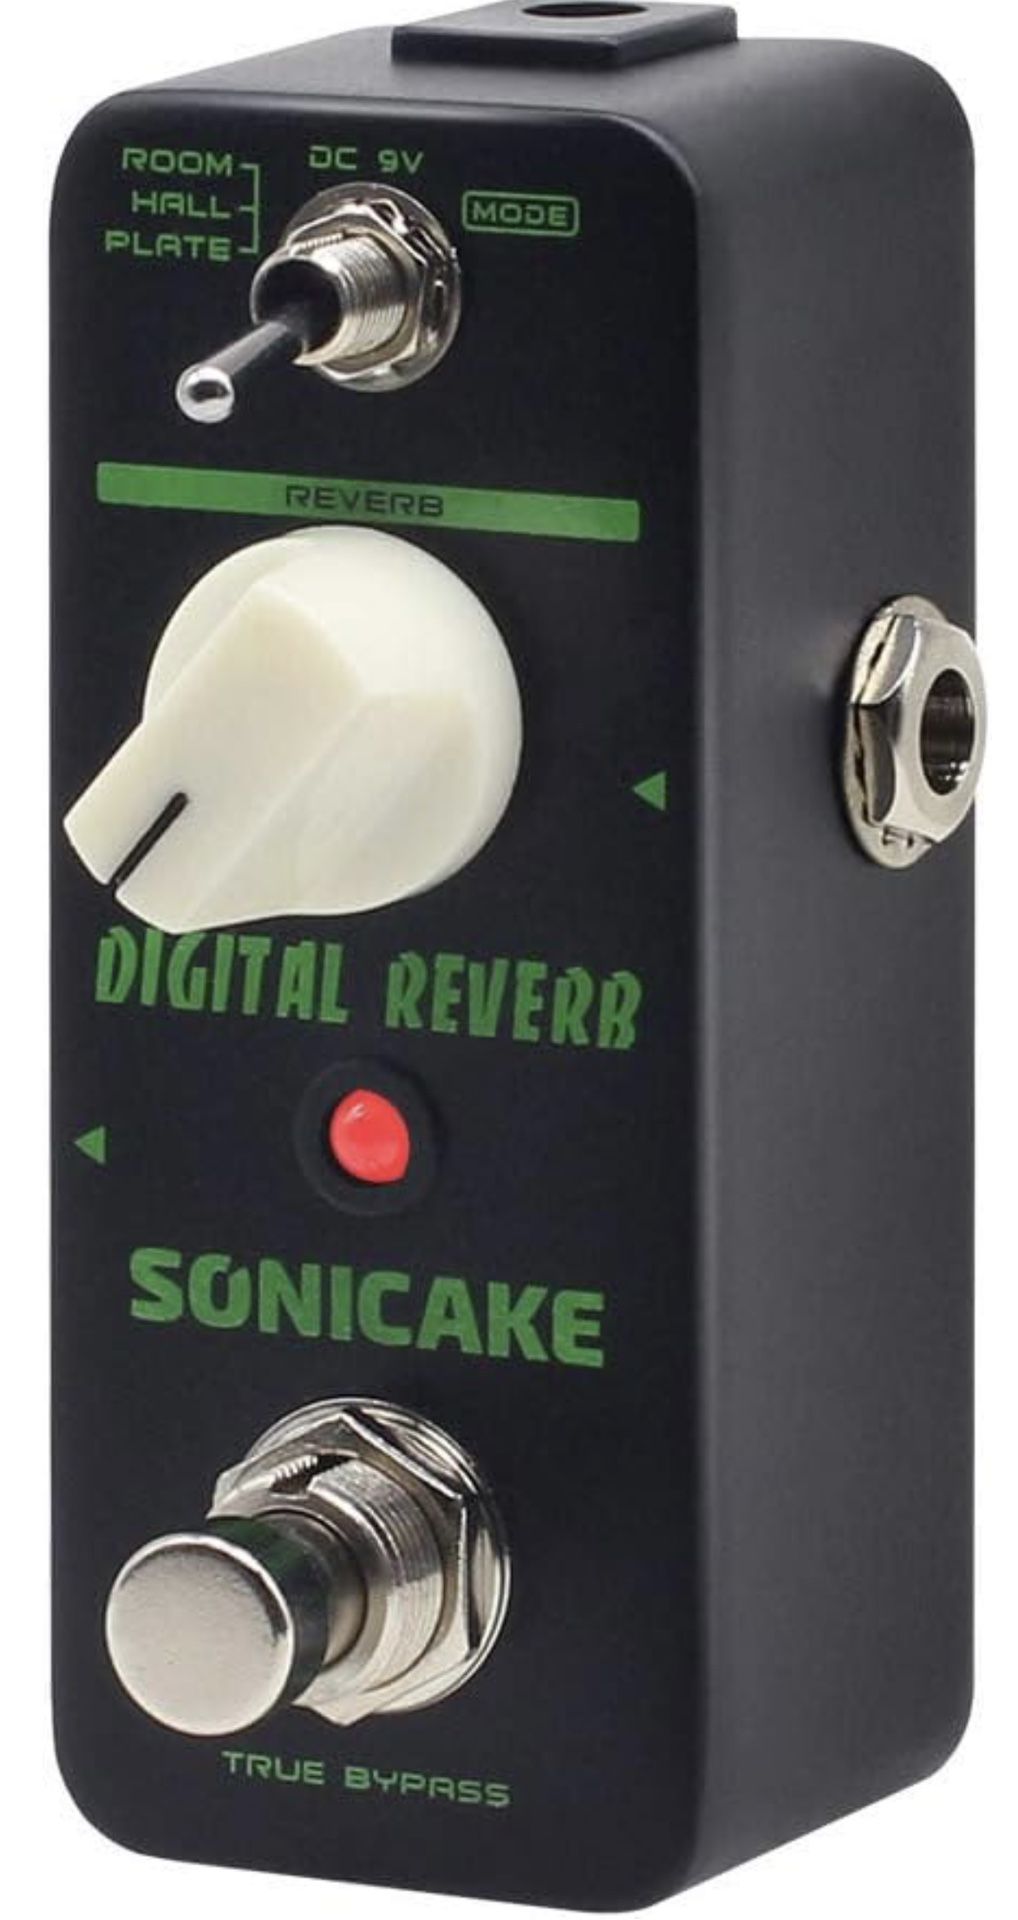 SONICAKE DIGITAL REVERB PEDAL NEW IN BOX